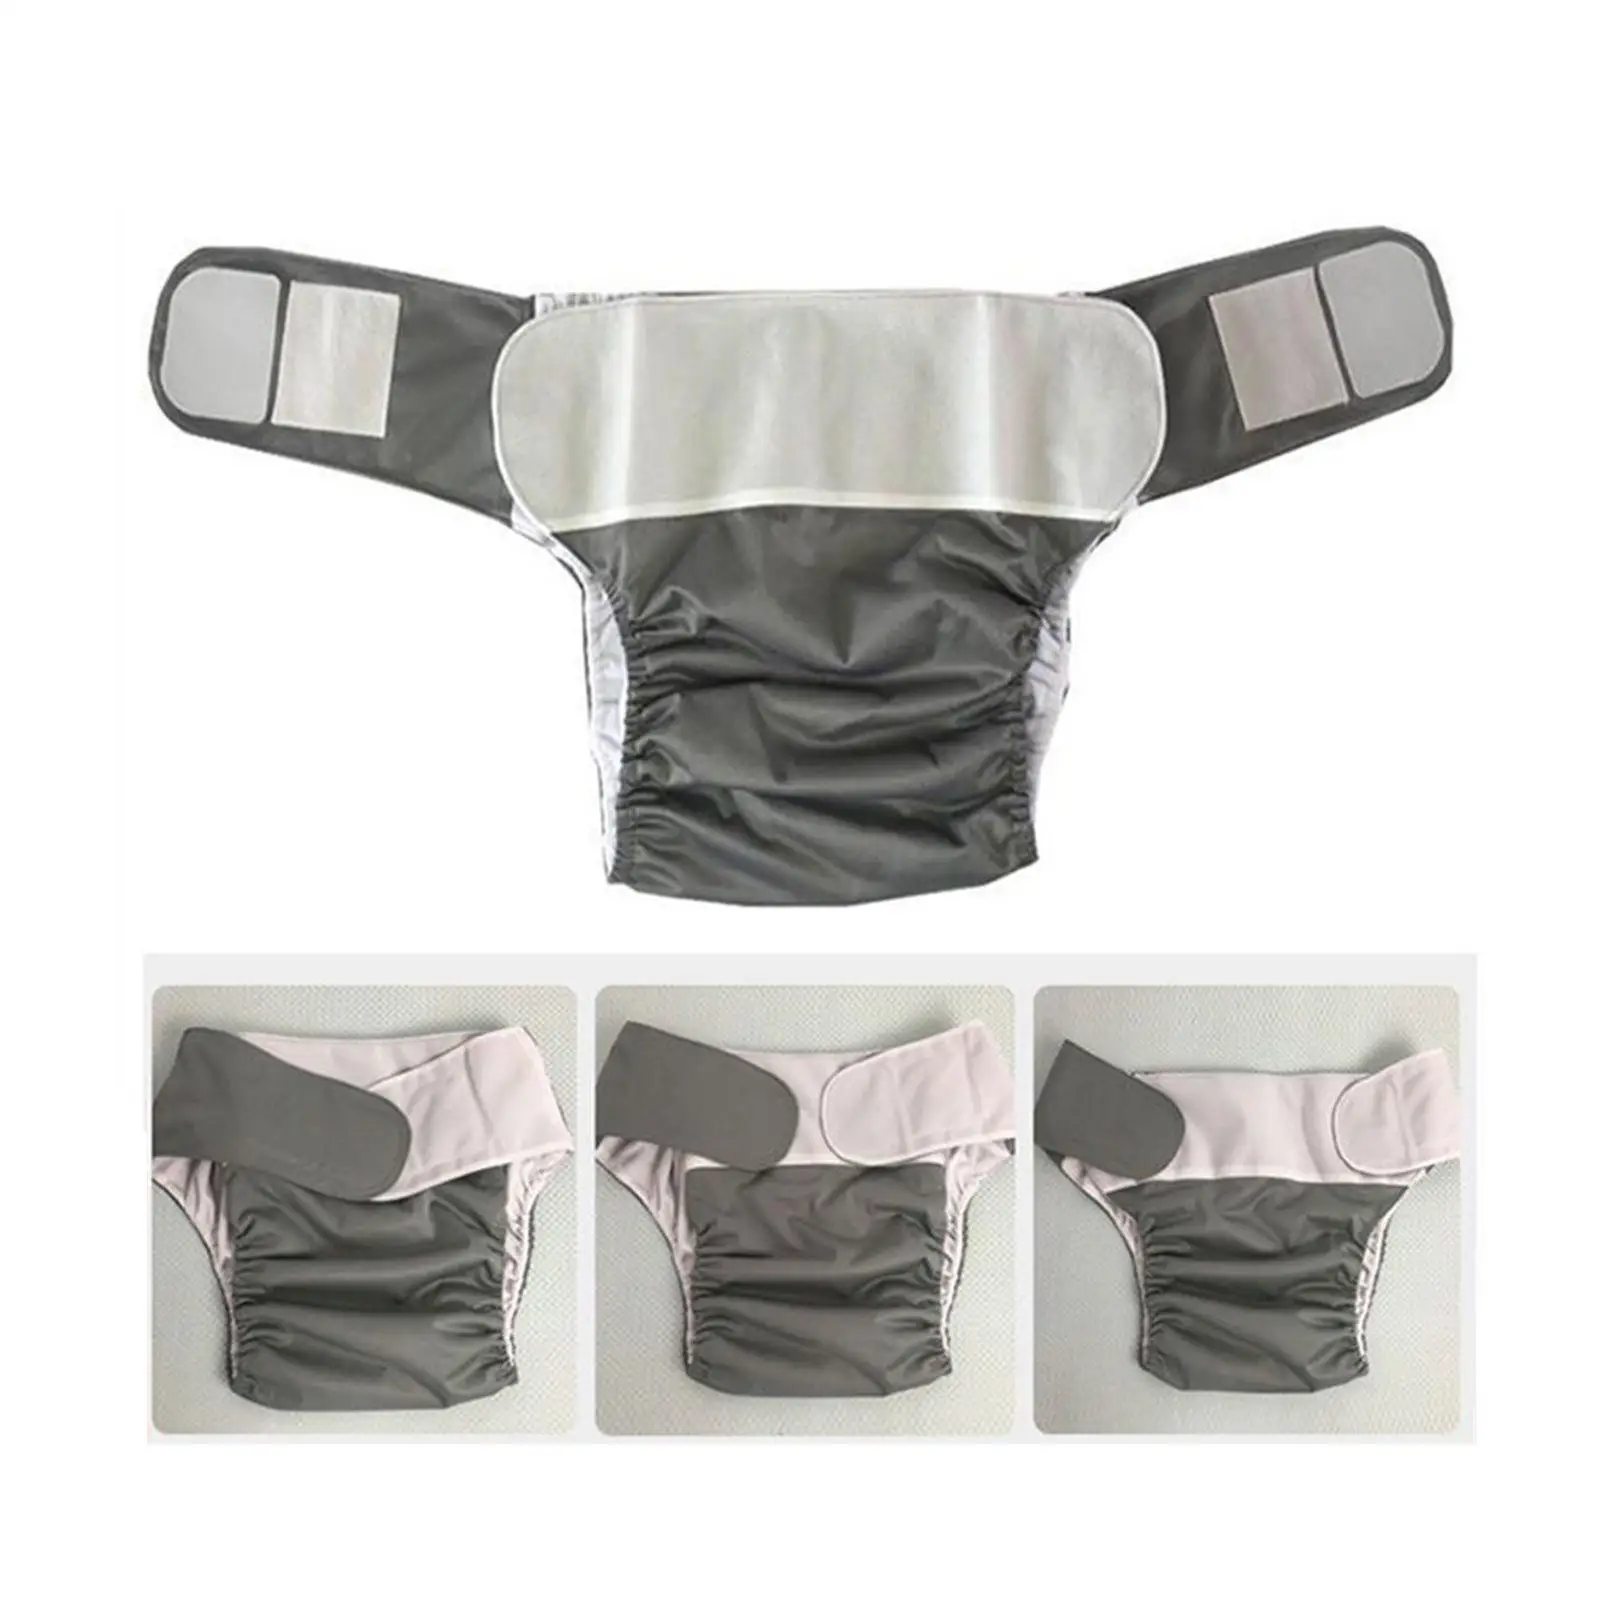 TPU Waterproof Adult Cloth Diaper Reusable Adjustable Comfortable Pocket Nappies for Seniors Men Women Waist 60cm-133.3cm